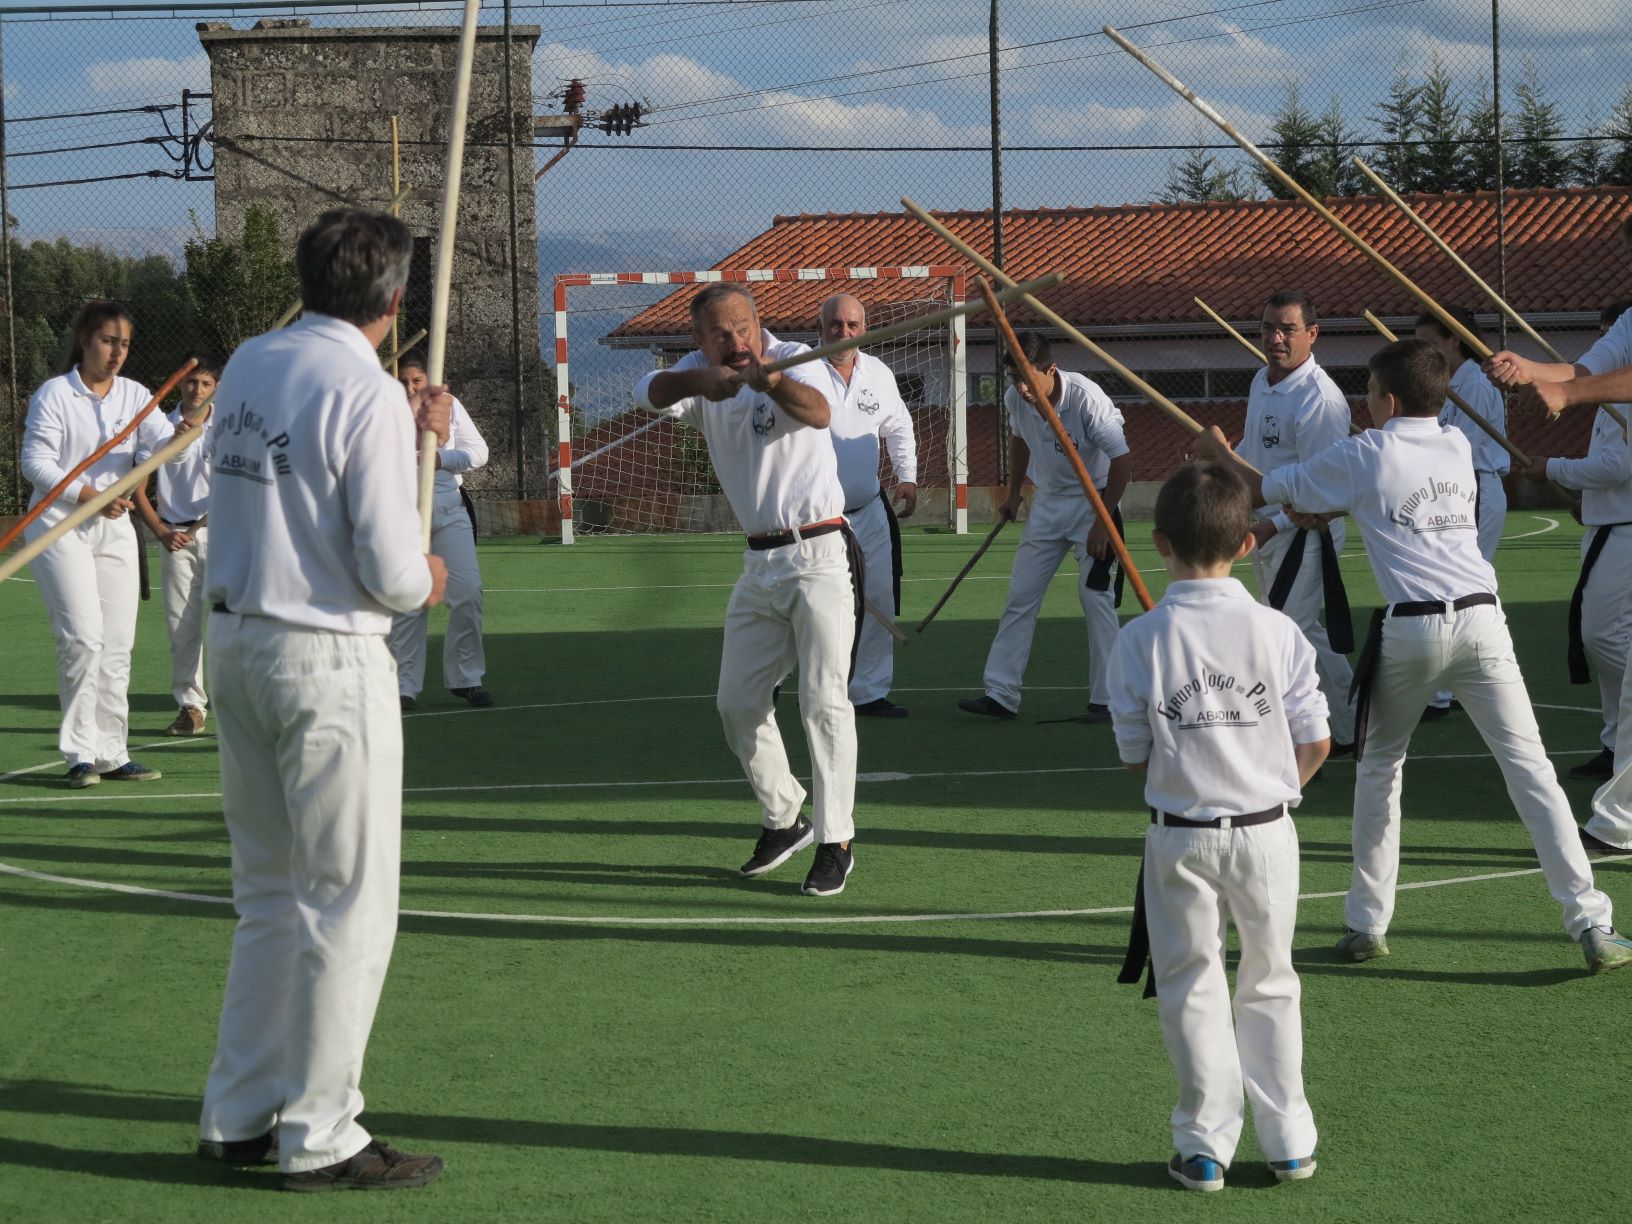 Jogo do Pau (Portugal) - Traditional Sports